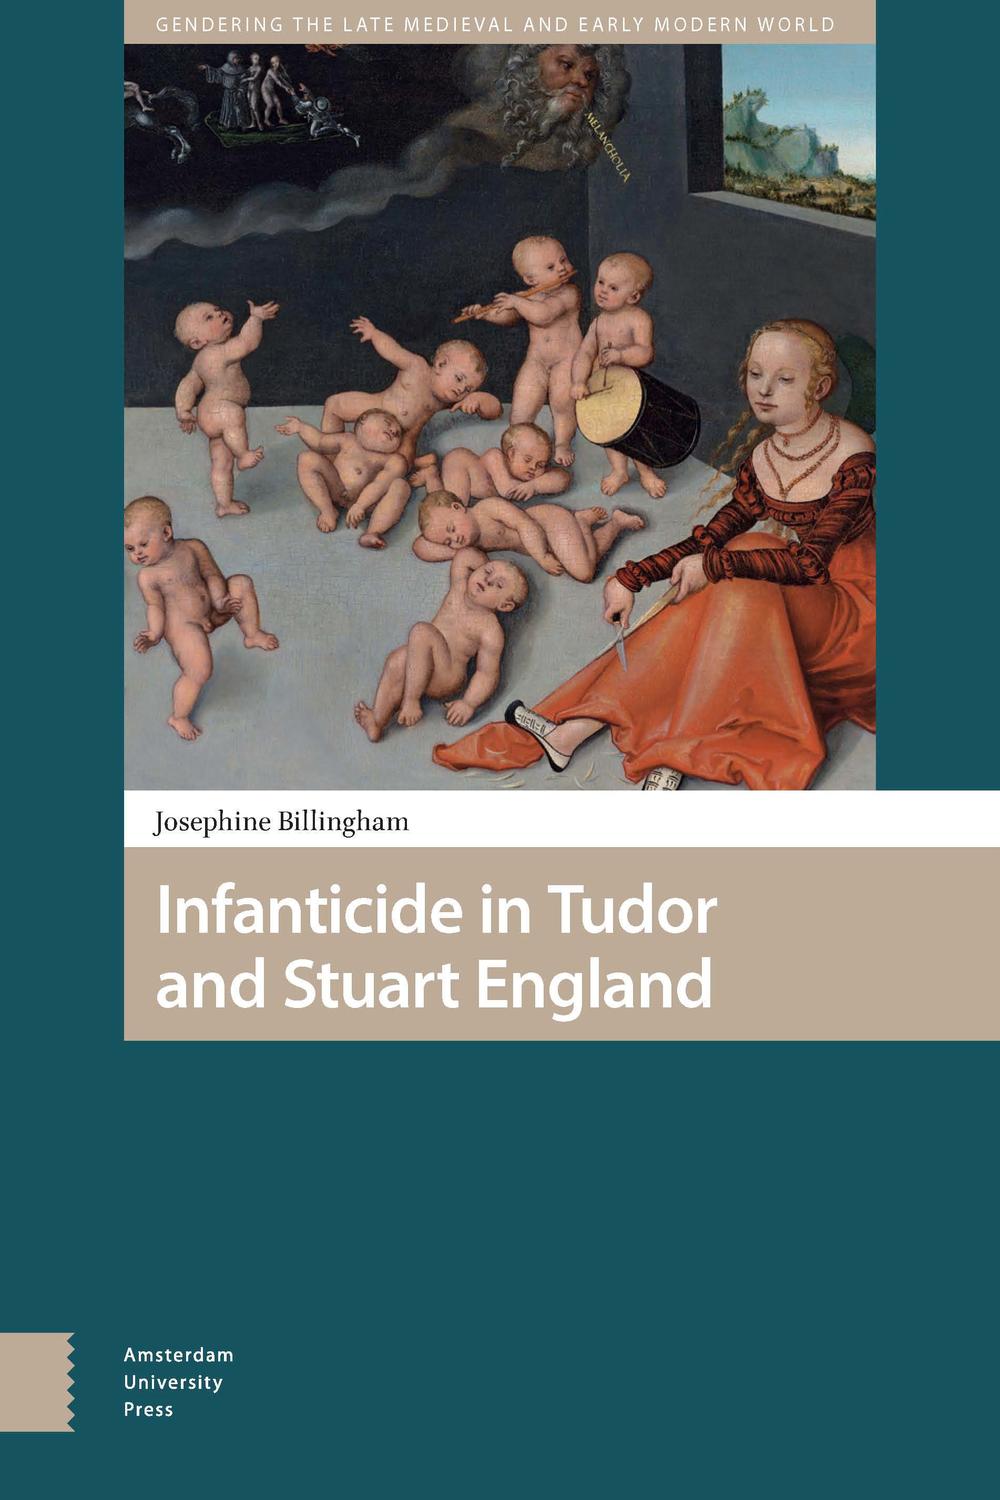 Infanticide in Tudor and Stuart England - Josephine Billingham